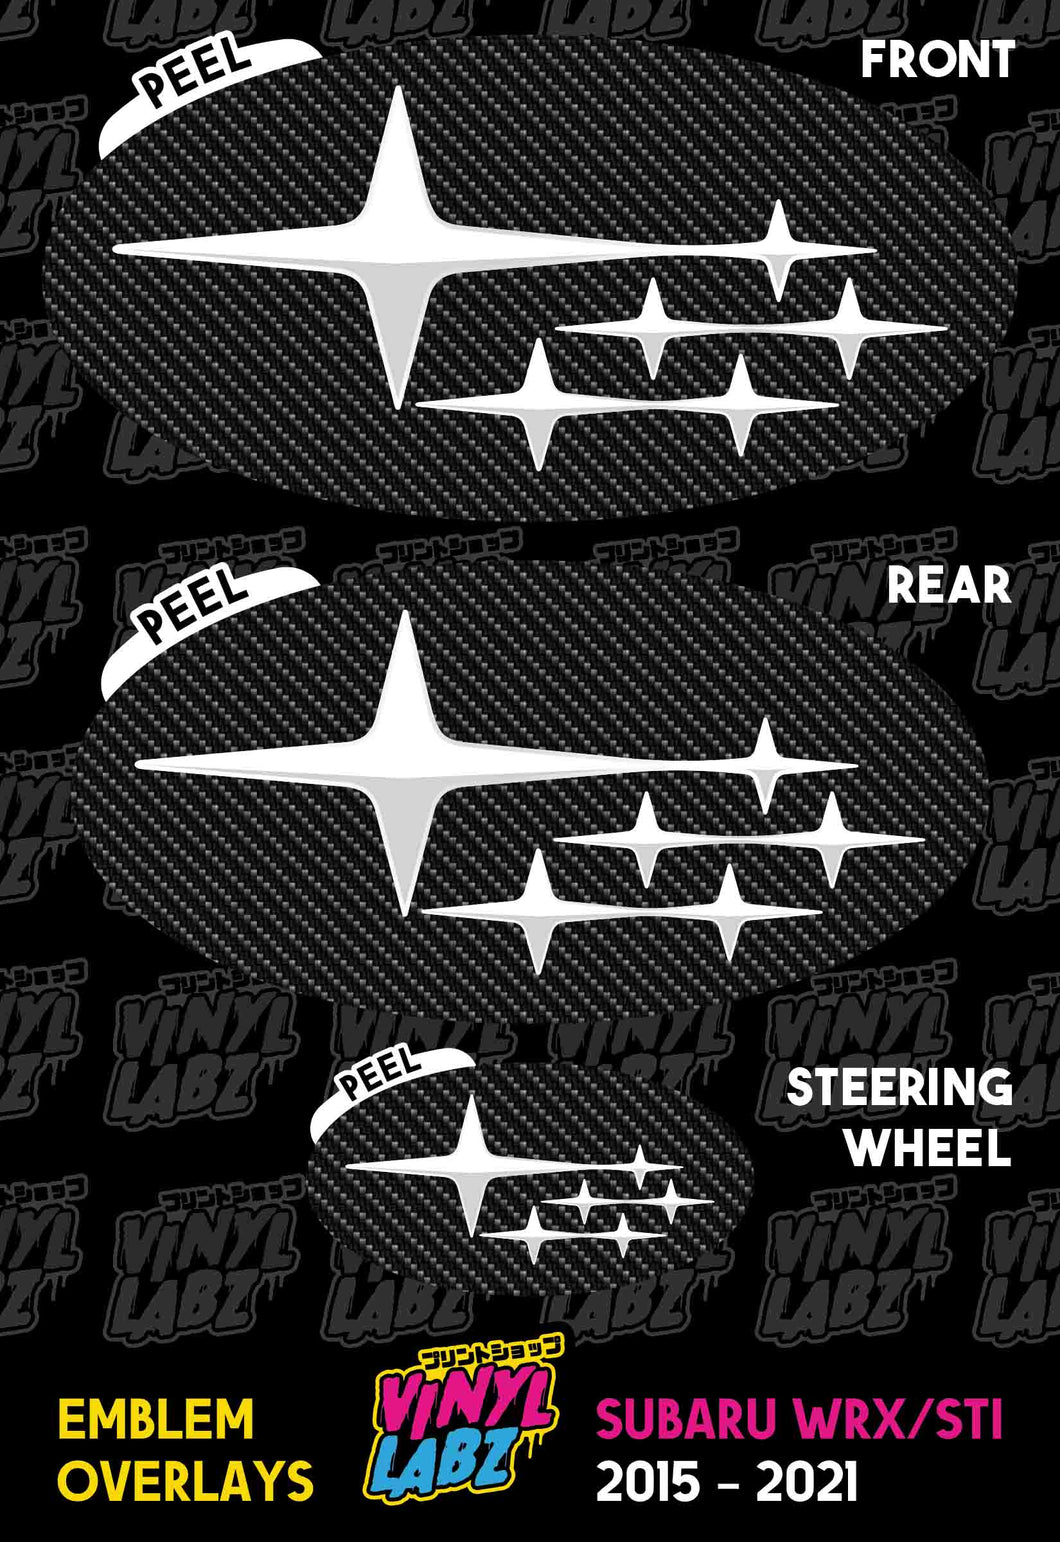 Subaru Vinyl Emblem Overlay (Carbon Fiber and White) | 2015-2021 Subaru WRX/STI